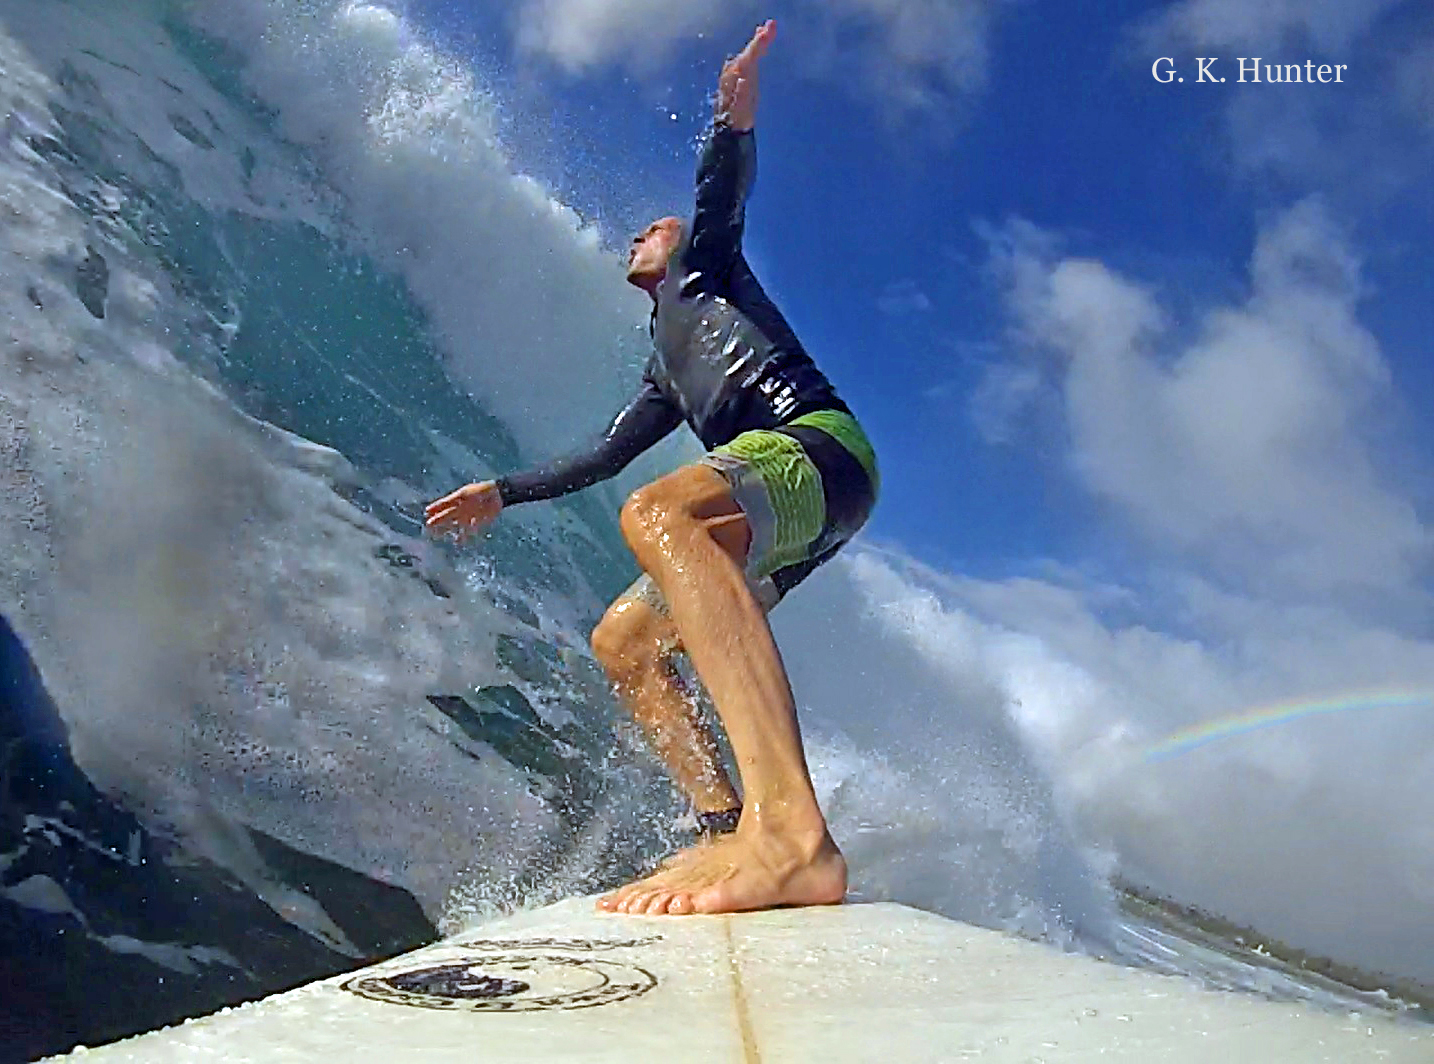 Author G. K. Hunter surfing a big wave in Haleiwa, Oahu, Hawaii